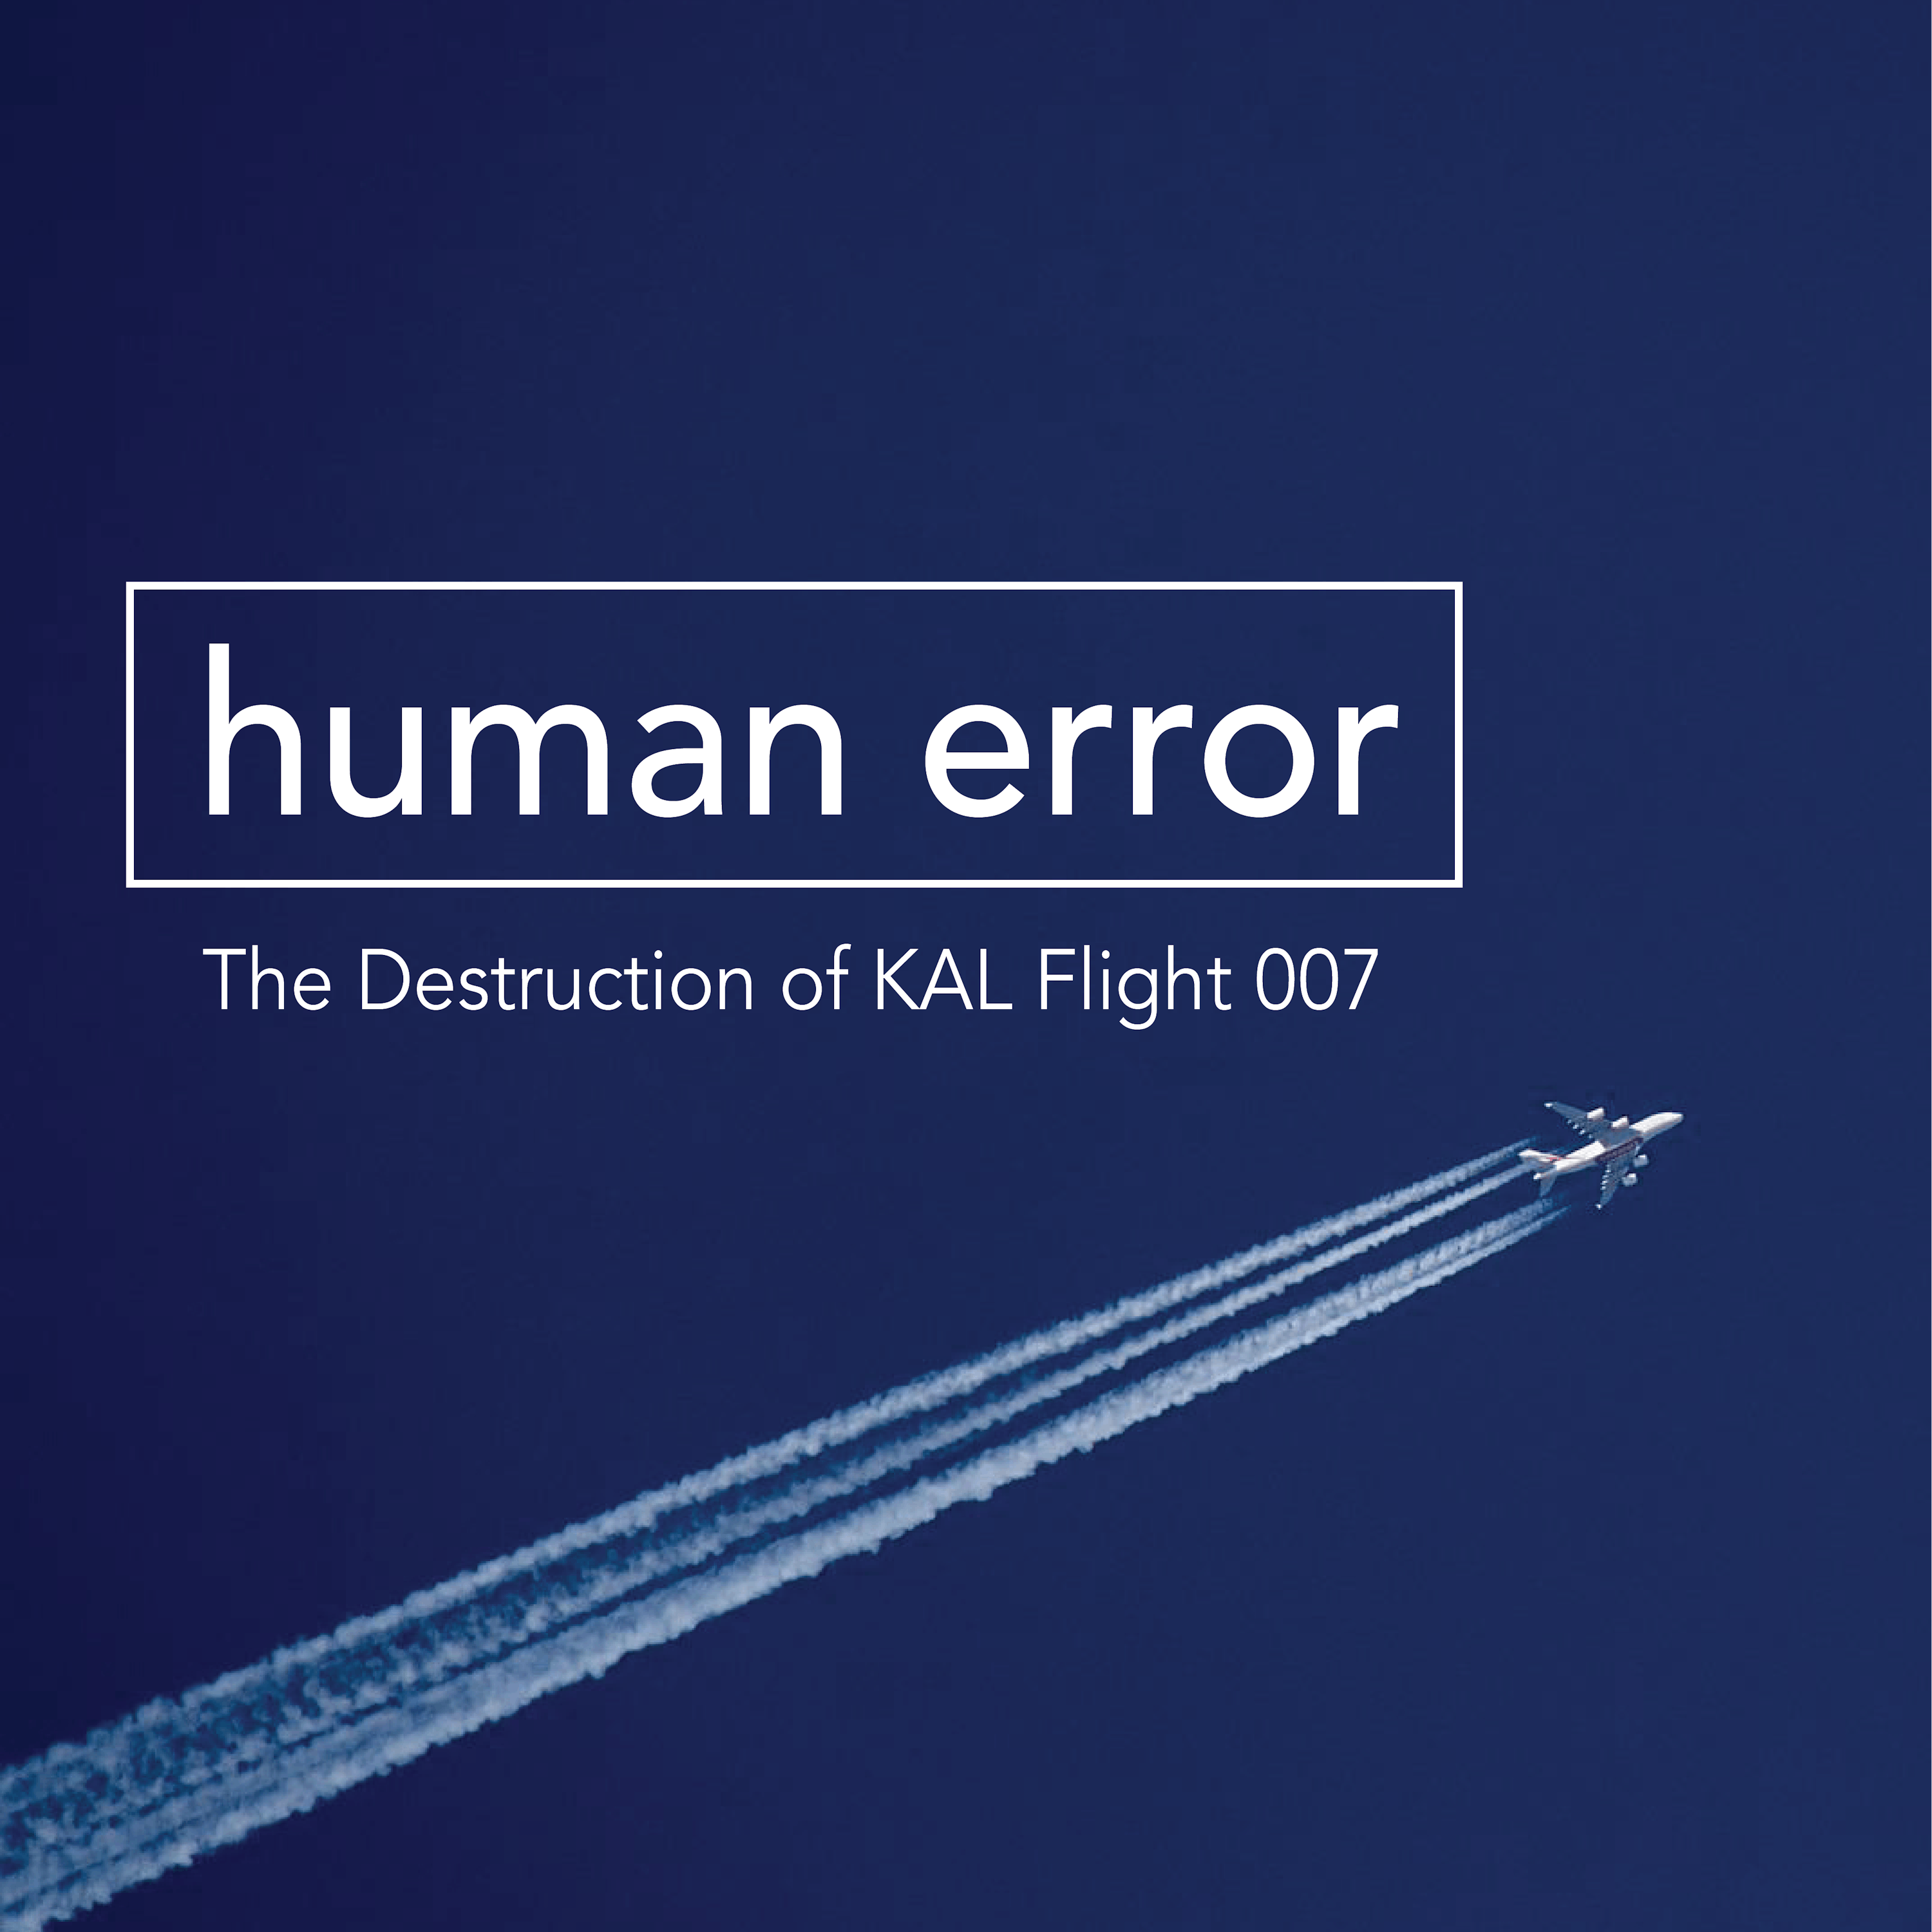 Human Error: The Destruction of KAL Flight 007